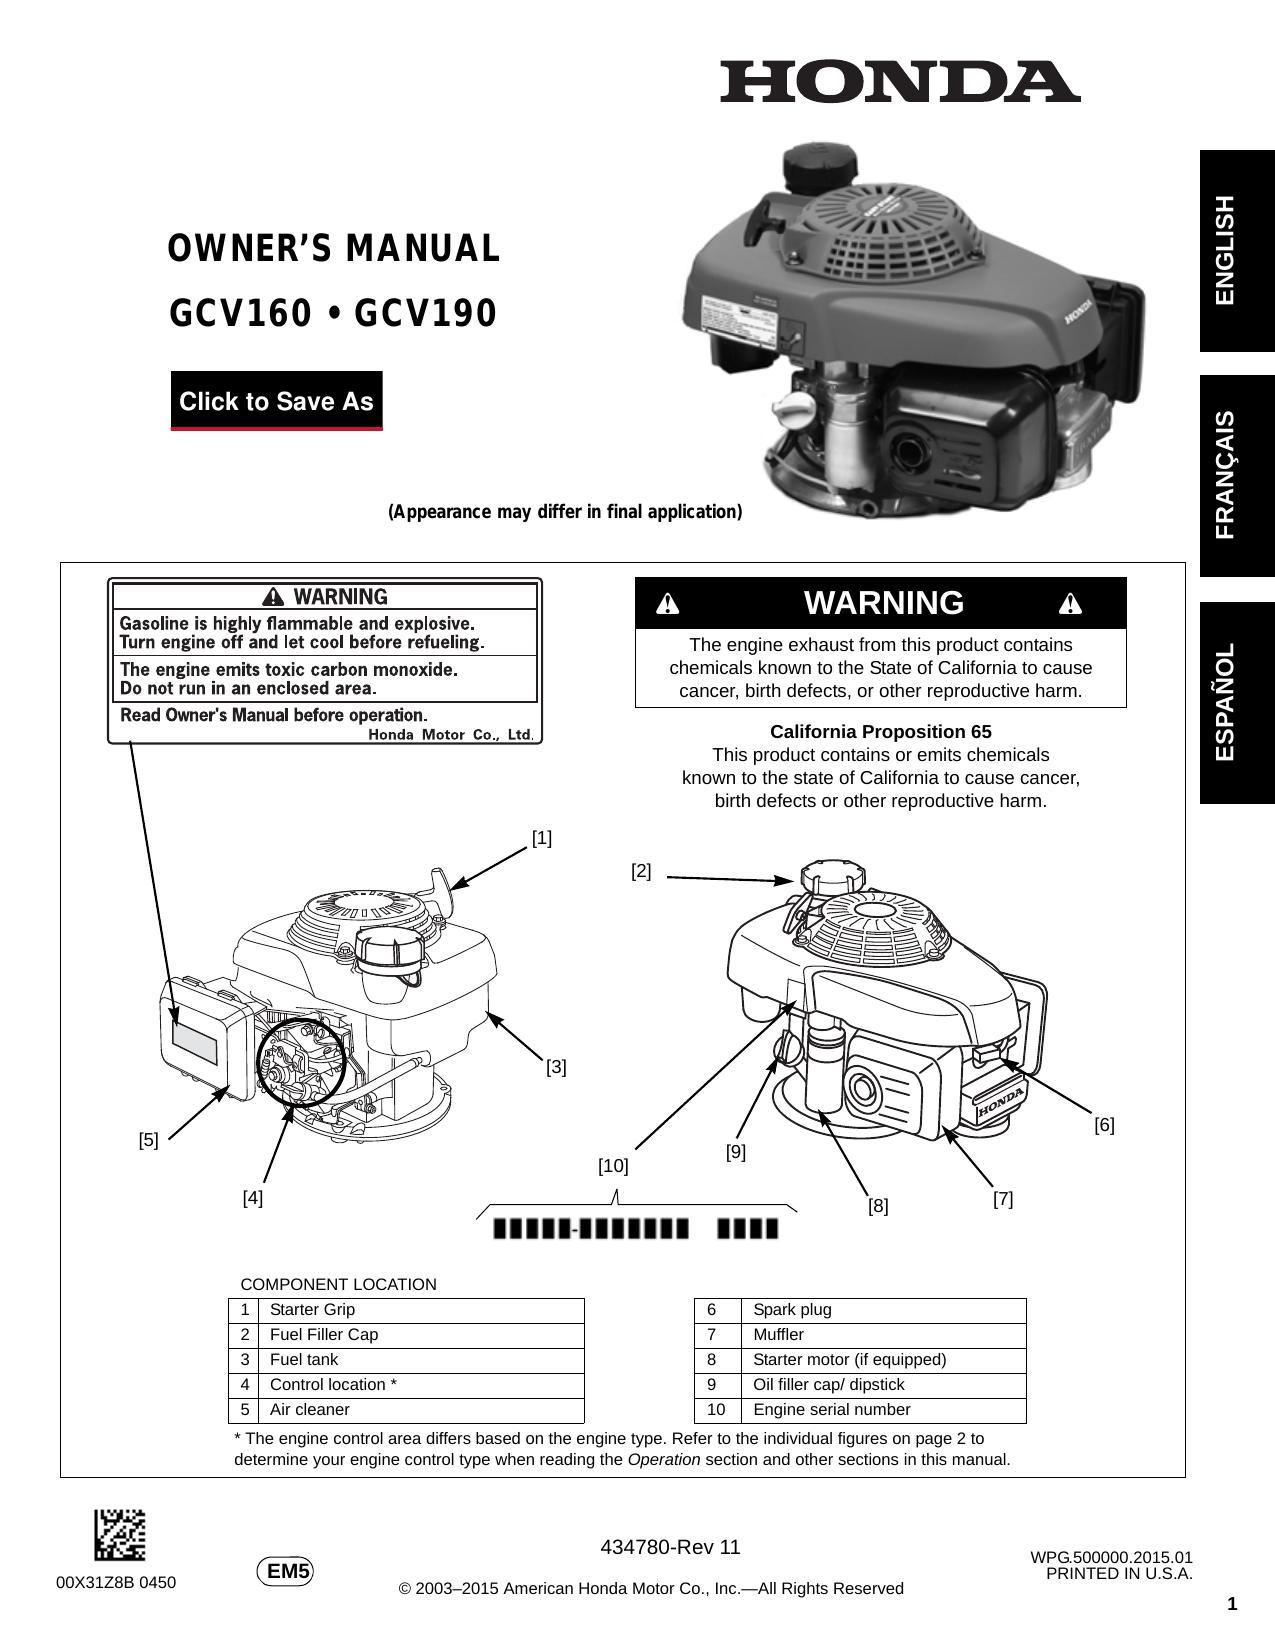 owners-manual-for-honda-gcv160-gcv190.pdf